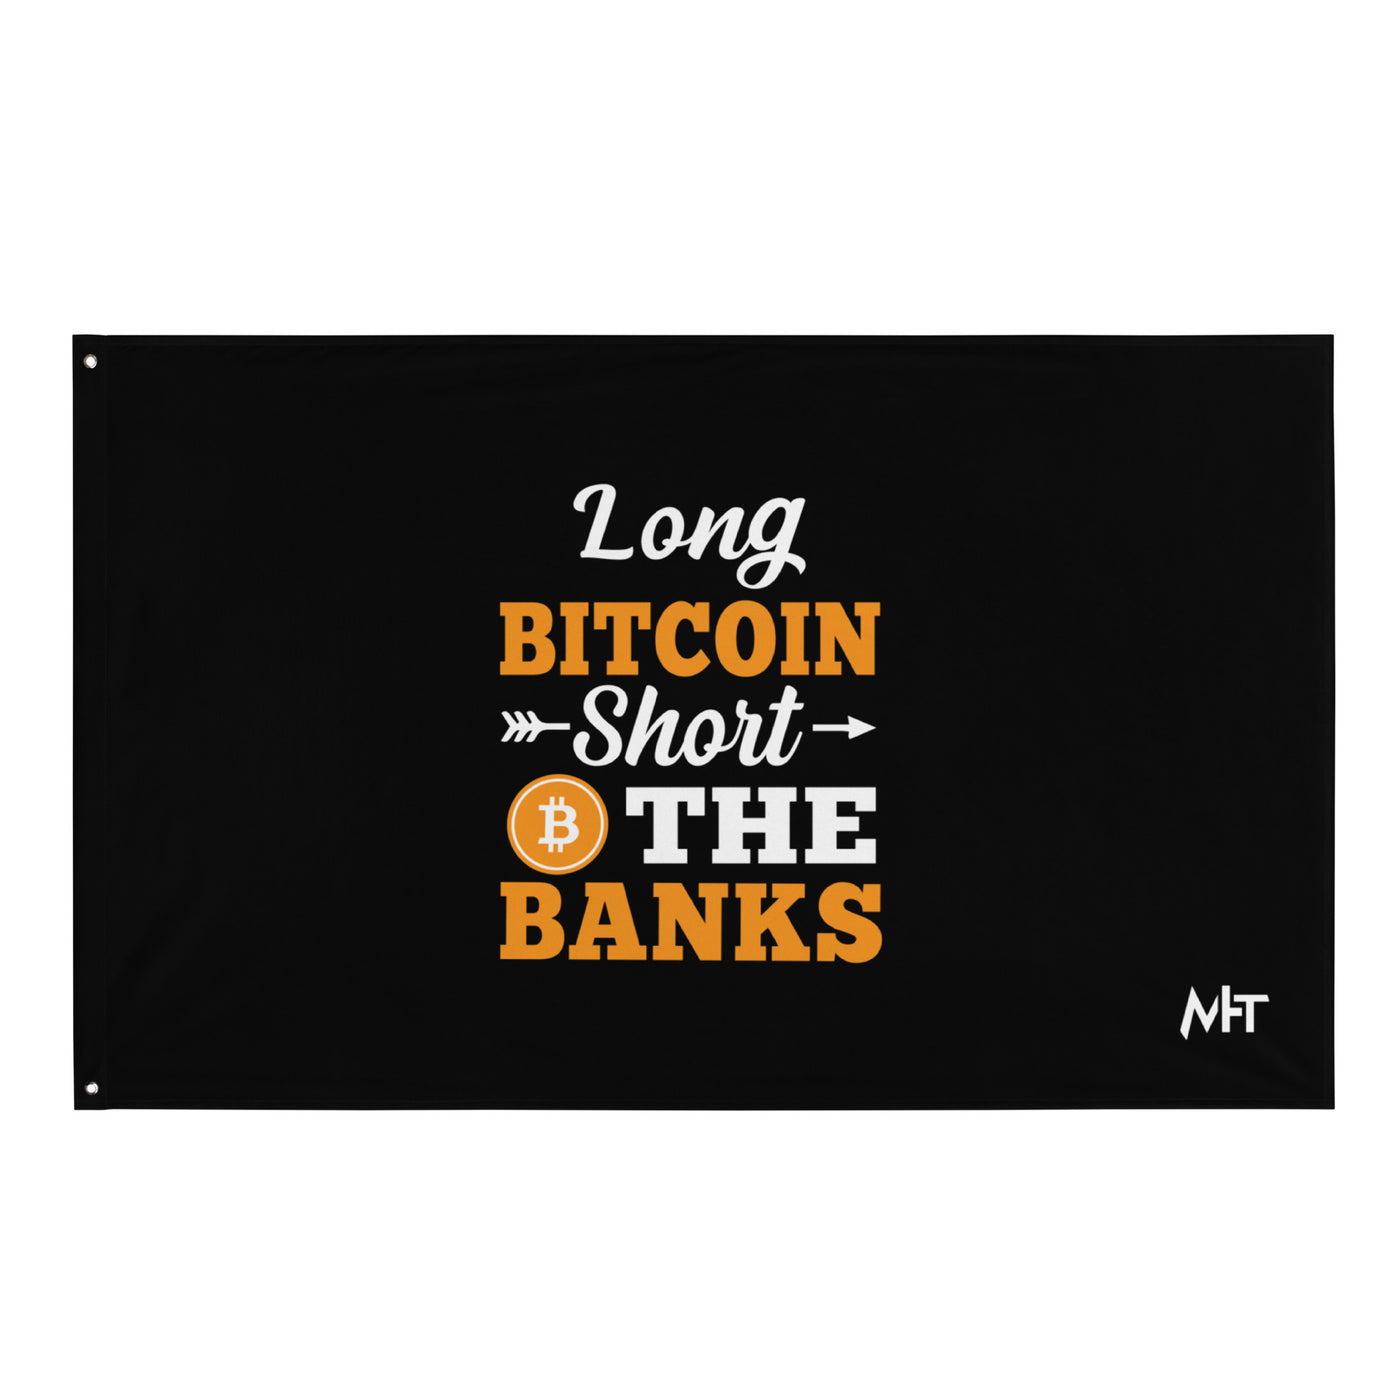 Long Big Coin, Short the Banks - Flag